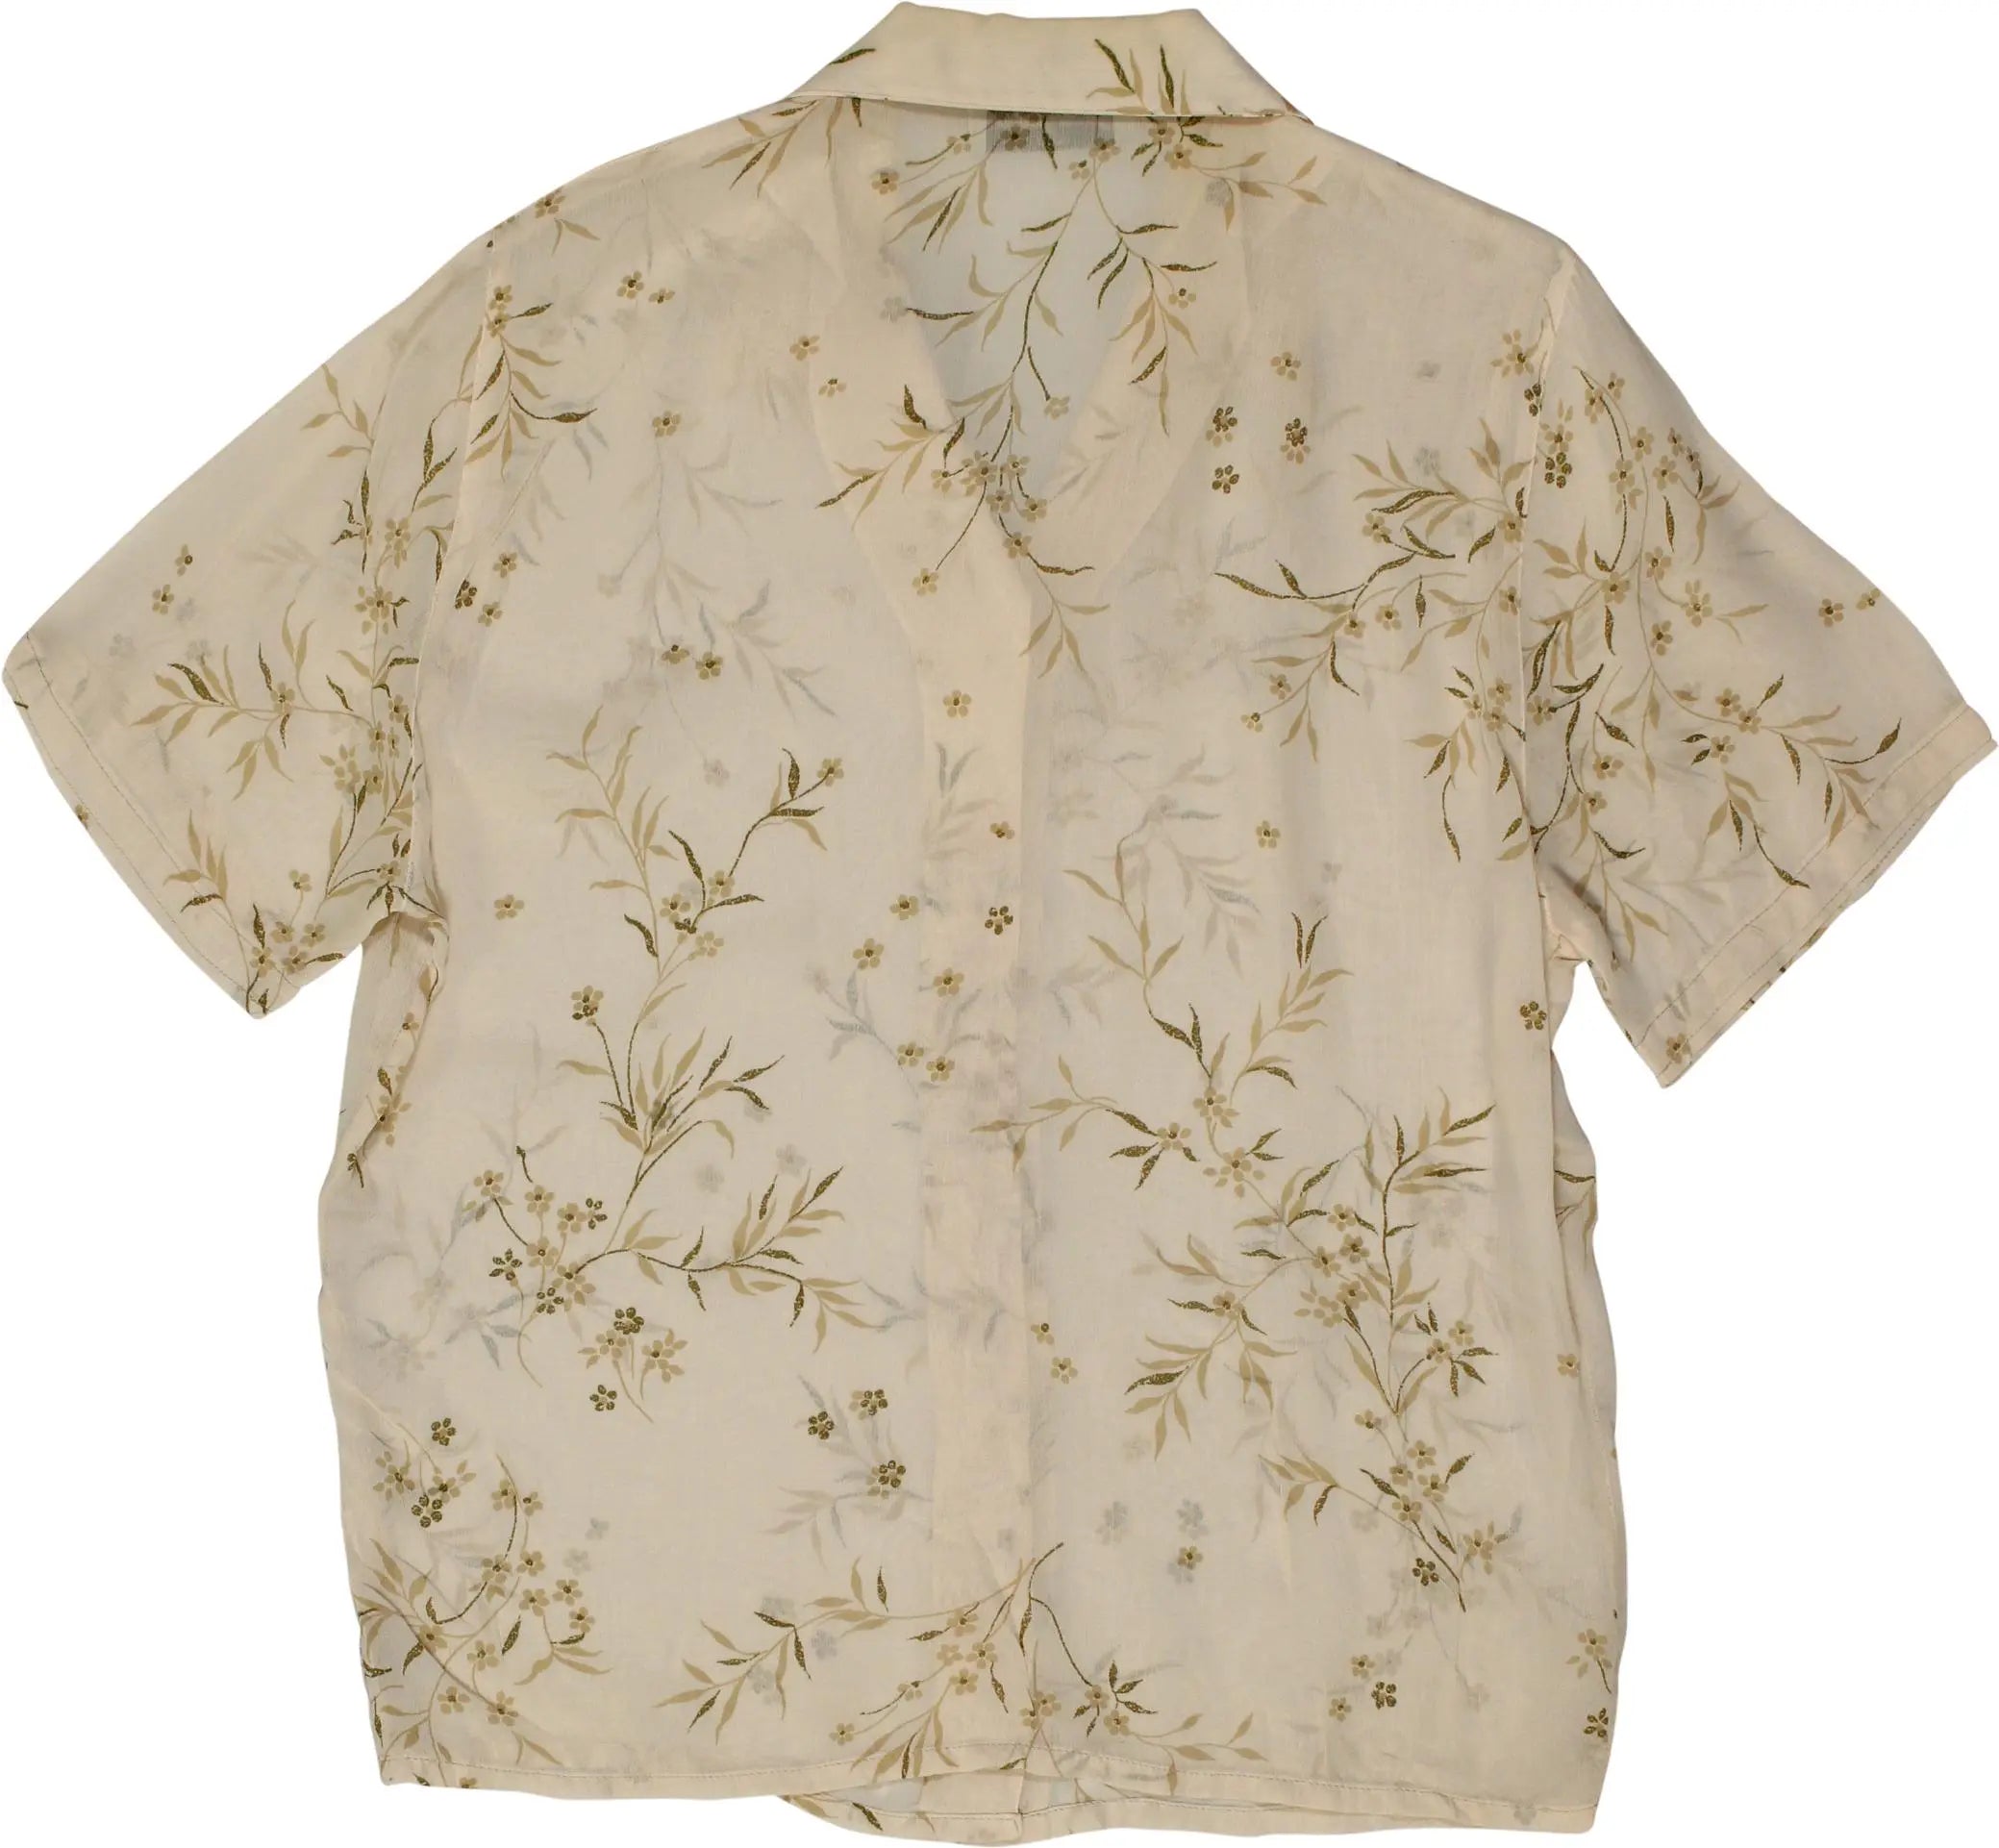 Giulia Galanti - Seethrough Shirt- ThriftTale.com - Vintage and second handclothing